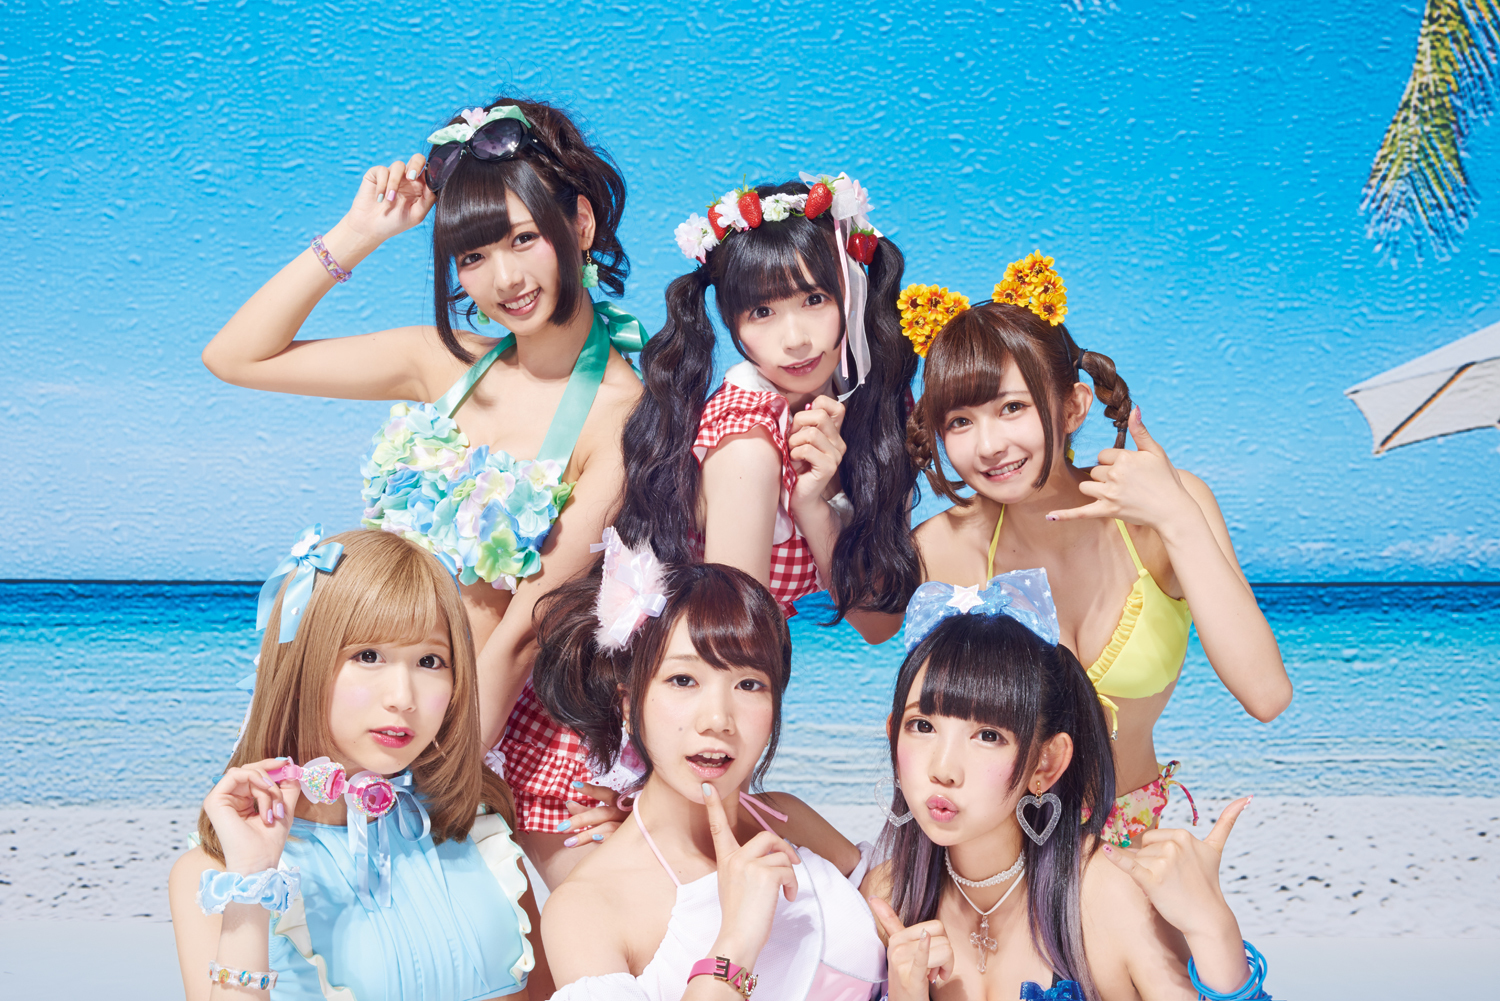 Bandjanaimon! Make a Splash in the MV for Their Summer Single “Natsu no Oh! Vibes”!